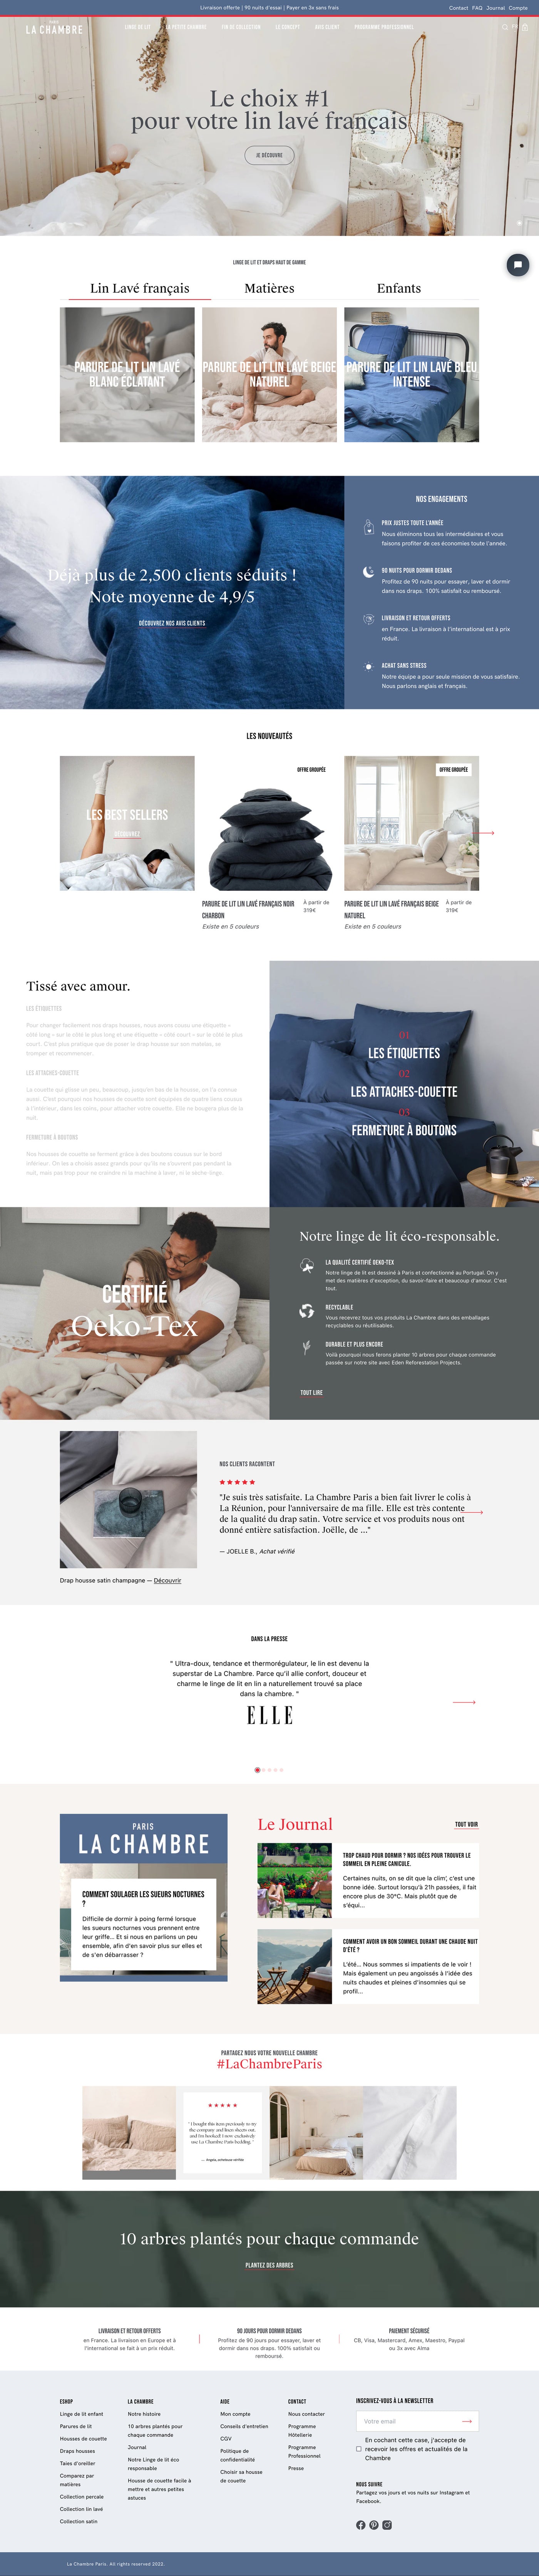 La Chambre Paris - Homepage - Desktop